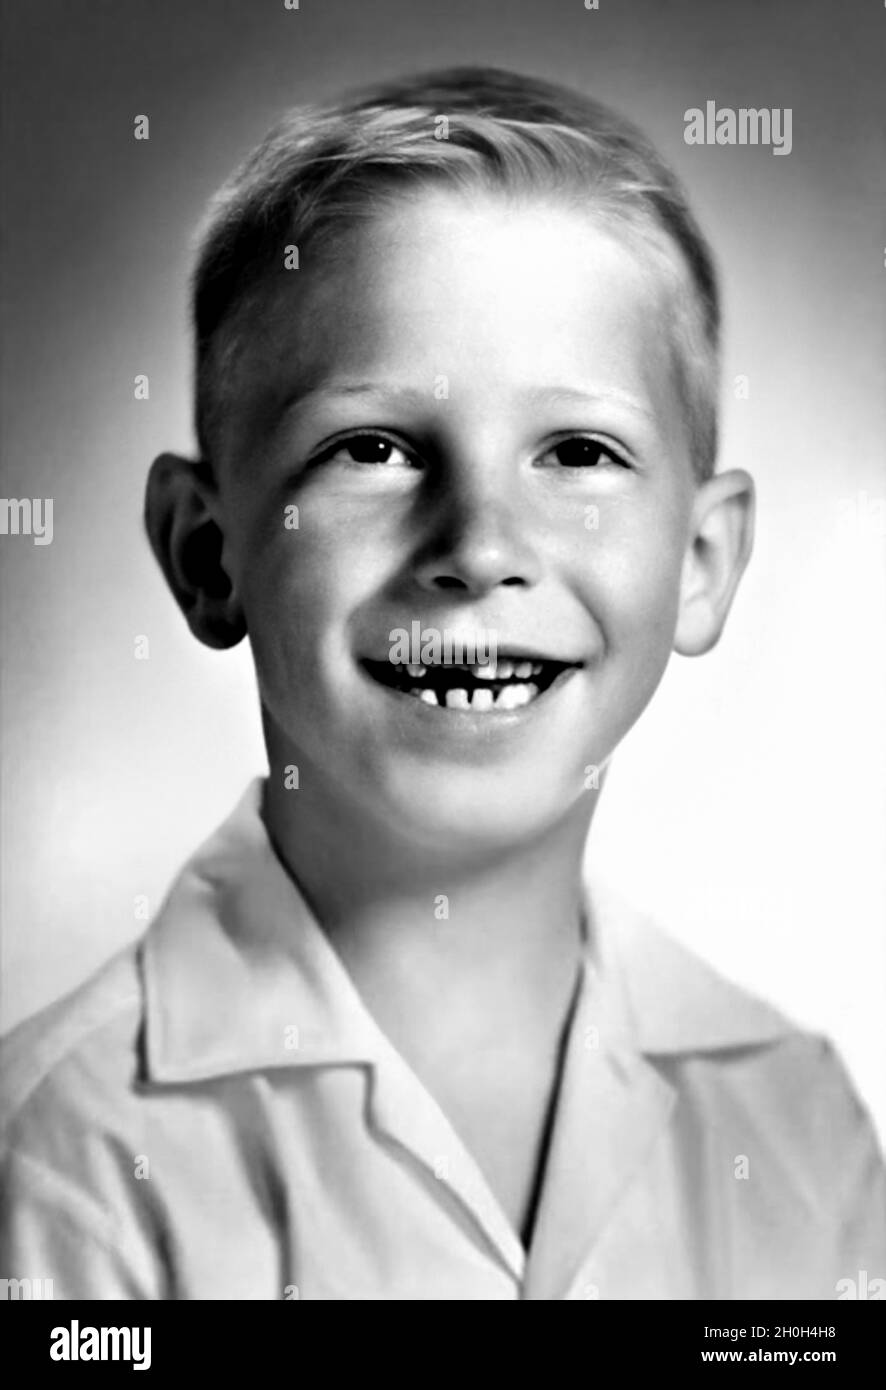 1962 ca, USA : The celebrated BILL GATES ( bo?rn in Seattle, 28 october 1955? ) when was a young boy aged 7 . Unknown photographer . American business magnate , investor and media proprietor founder of WINDOWS MICROSOFT company . Unknown photographer .- INFORMATICA - INFORMATICO - INFORMATICS - COMPUTER TECHNOLOGY - INVENTORE - INVENTOR - HISTORY - FOTO STORICHE - TYCOON - personalità da bambino bambini da giovane - personality personalities when was young - INFANZIA - CHILDHOOD - BAMBINO - BAMBINI - CHILDREN - CHILD --- ARCHIVIO GBB Stock Photo